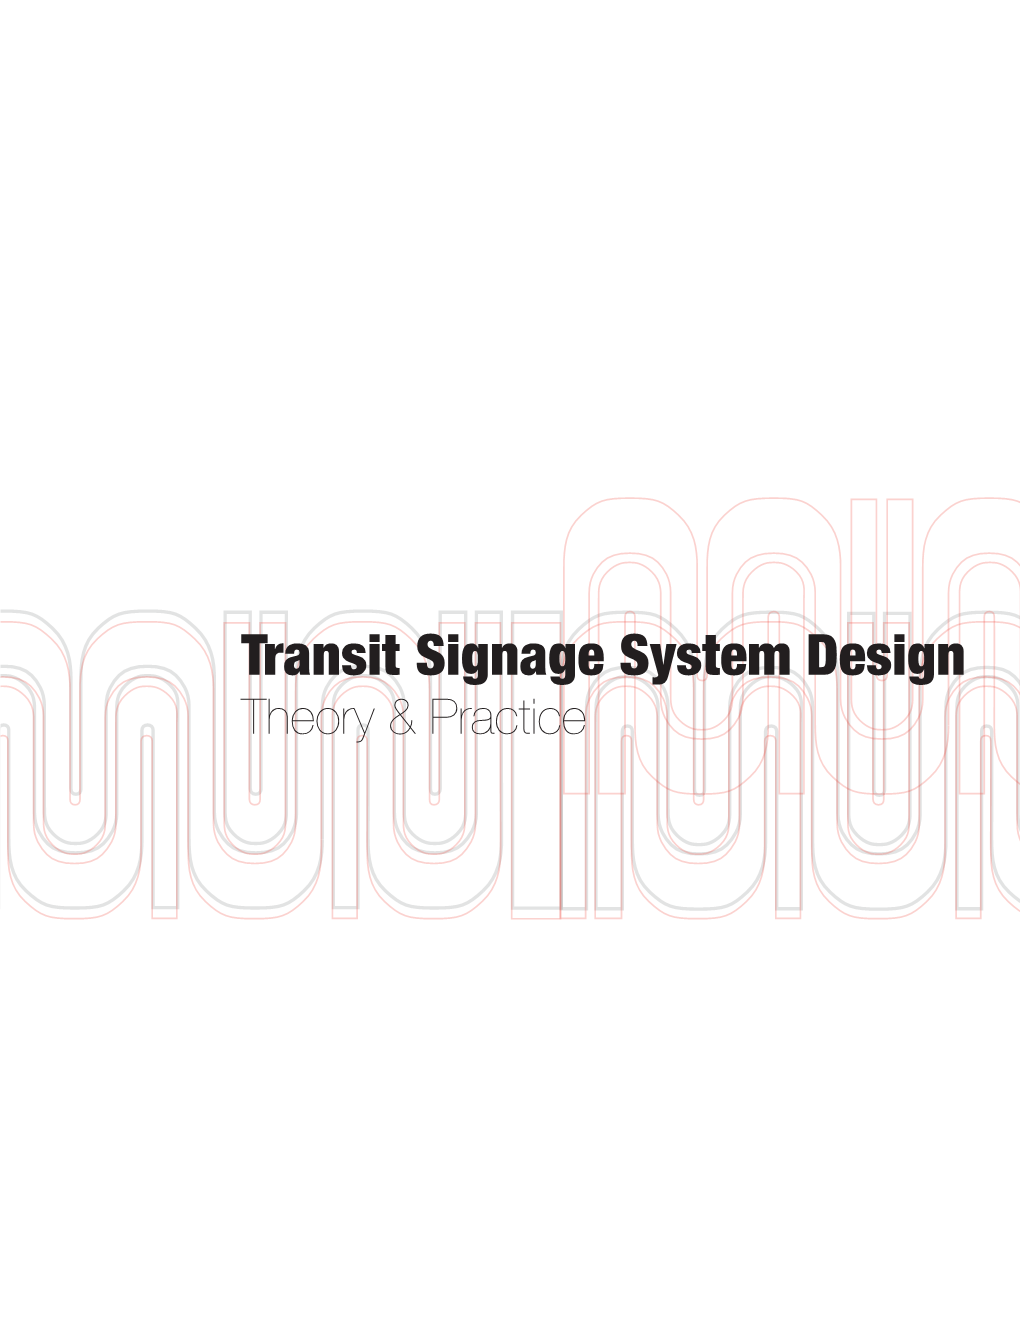 Transit Signage System Design Theory & Practice